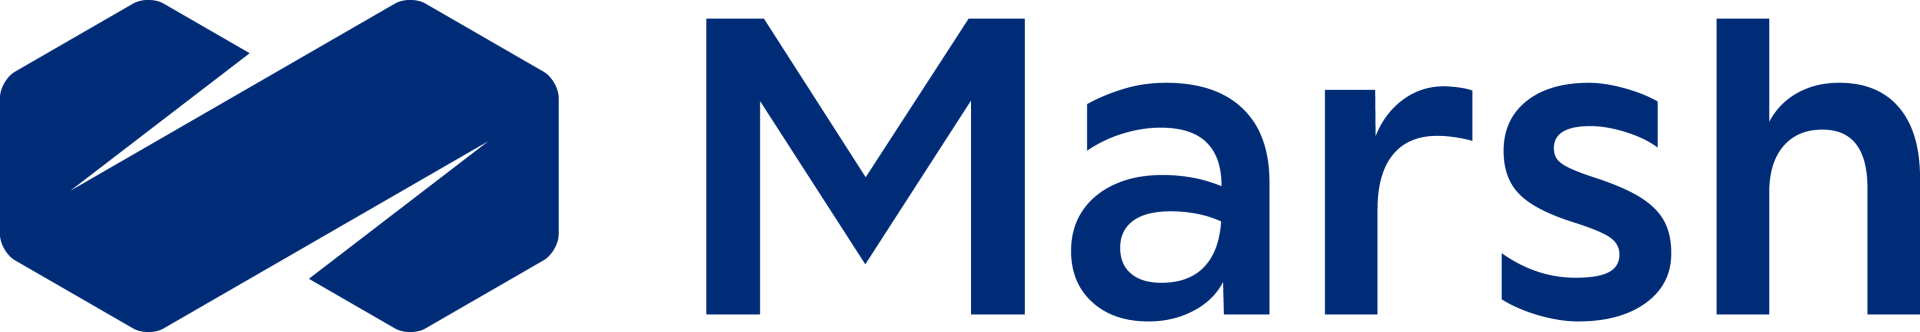 Logo MARSH